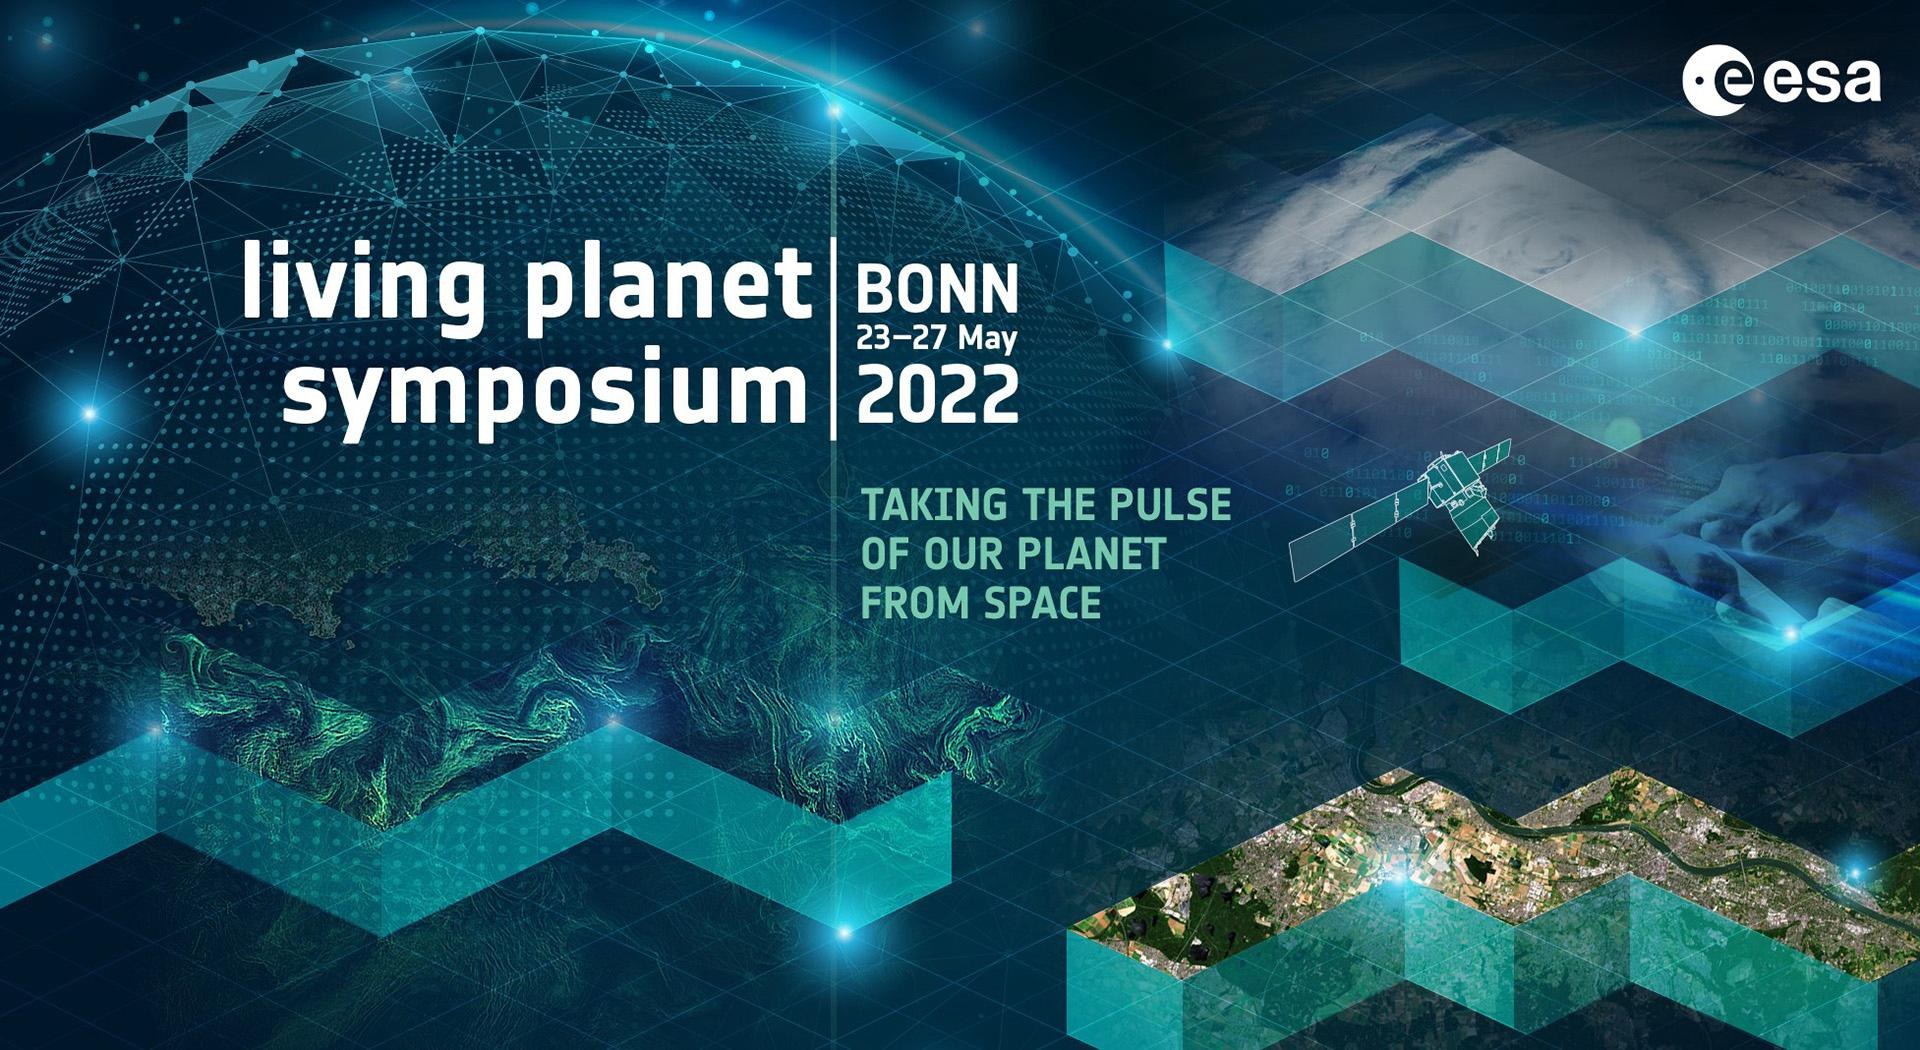 Symposium "Living Planet" in Bonn